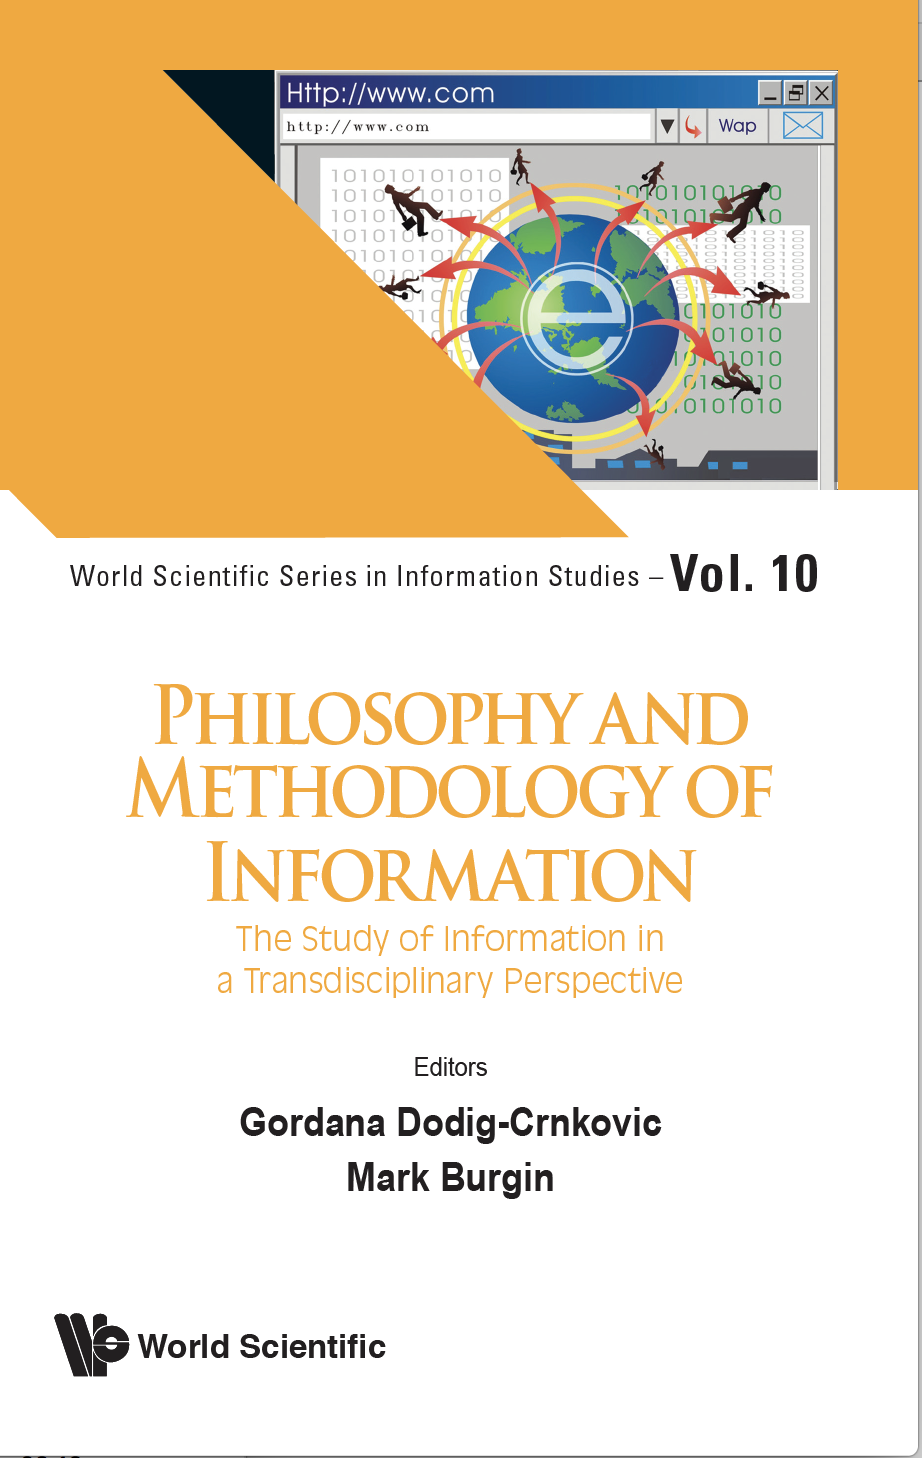 Book-WS-PhilosophyMethodologyInformation.png